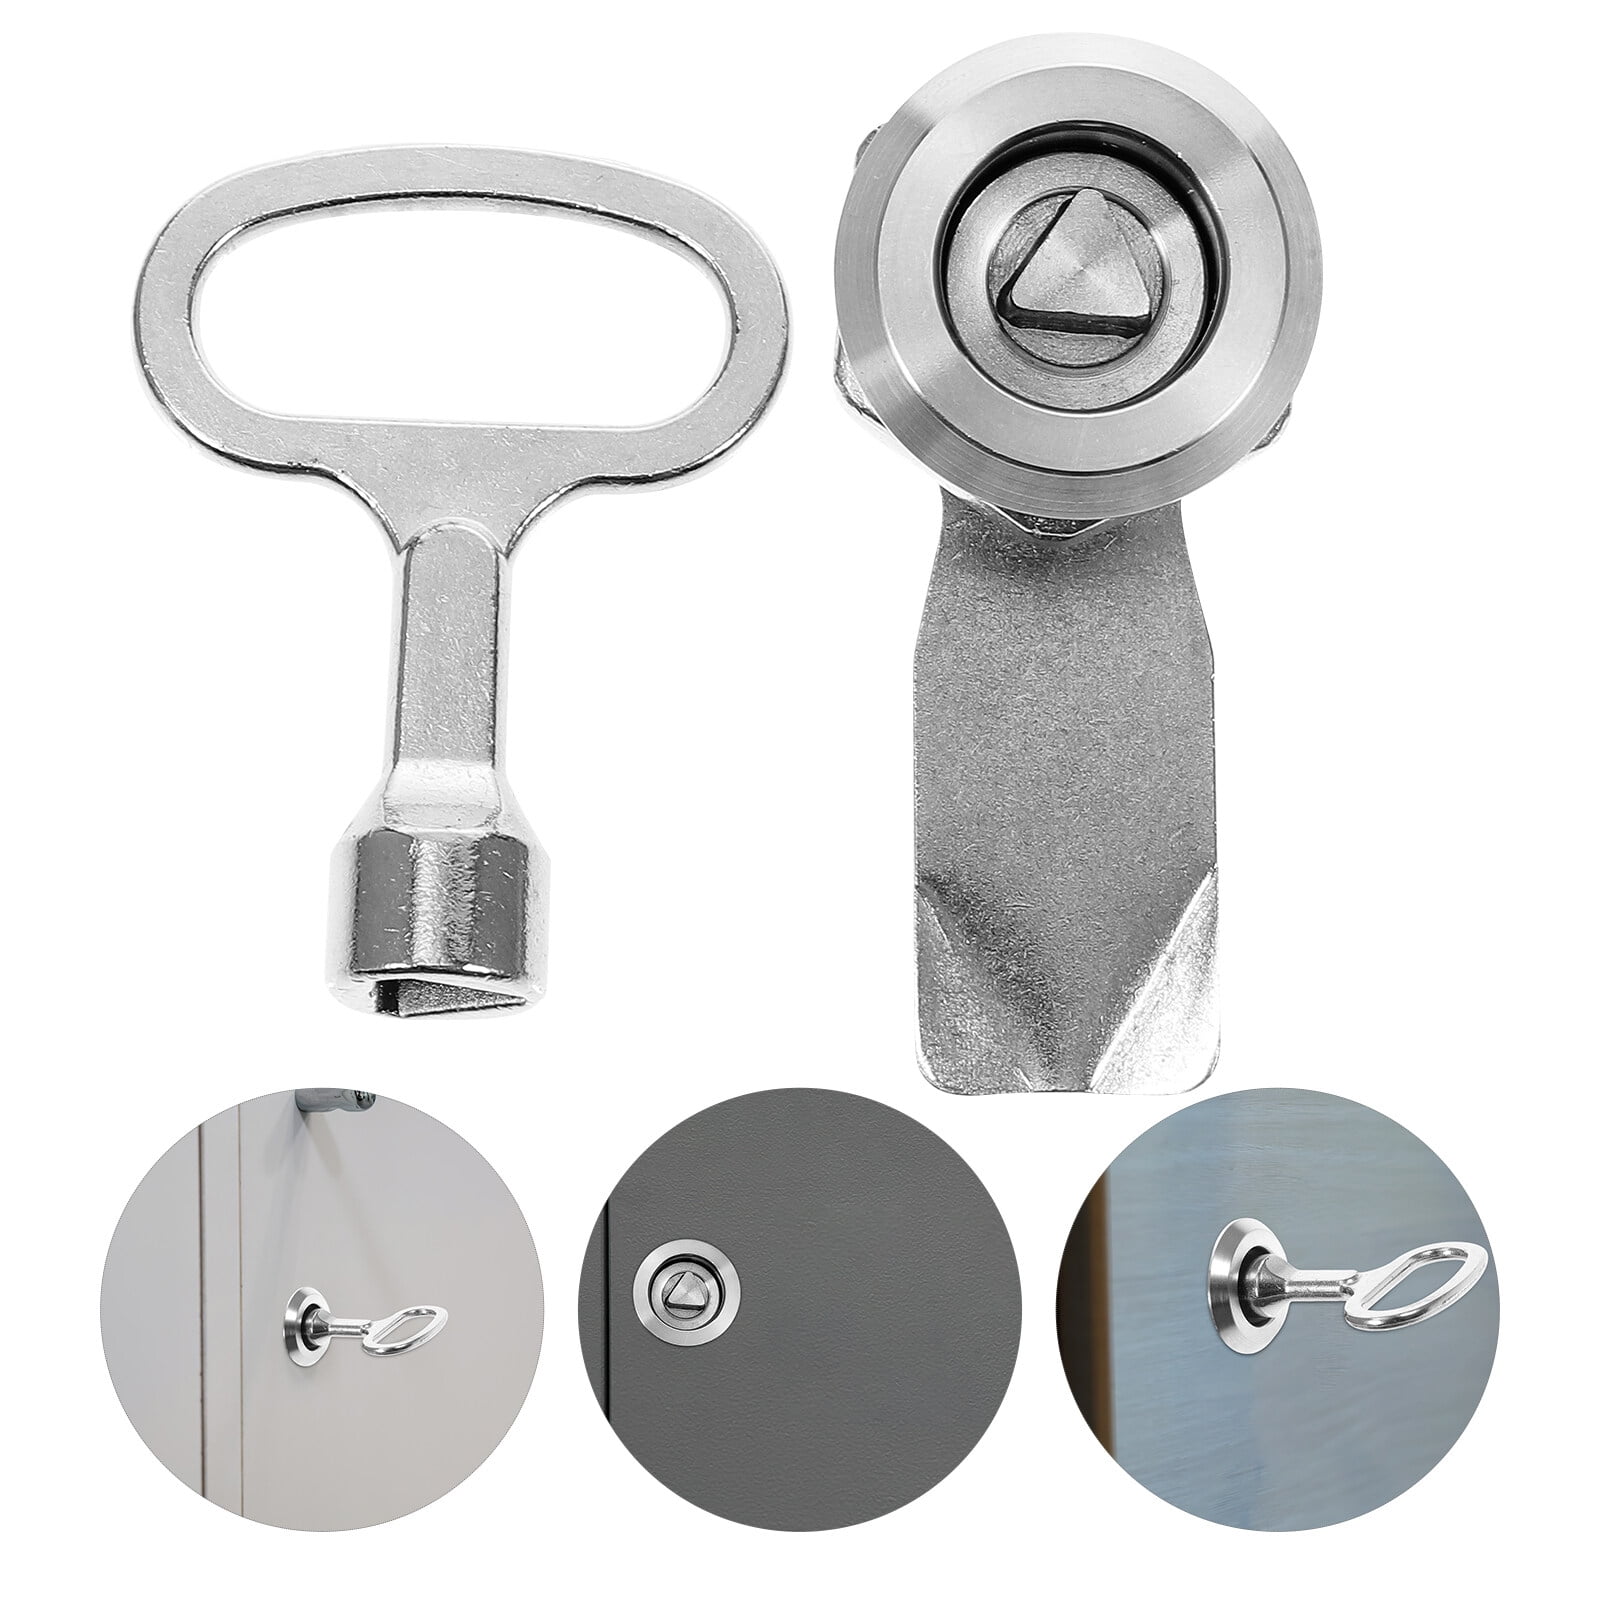 Tubular Lock File Cabinet Lock Replacement Drawer Lock with Square Socket Key, Men's, Size: 6x3cm